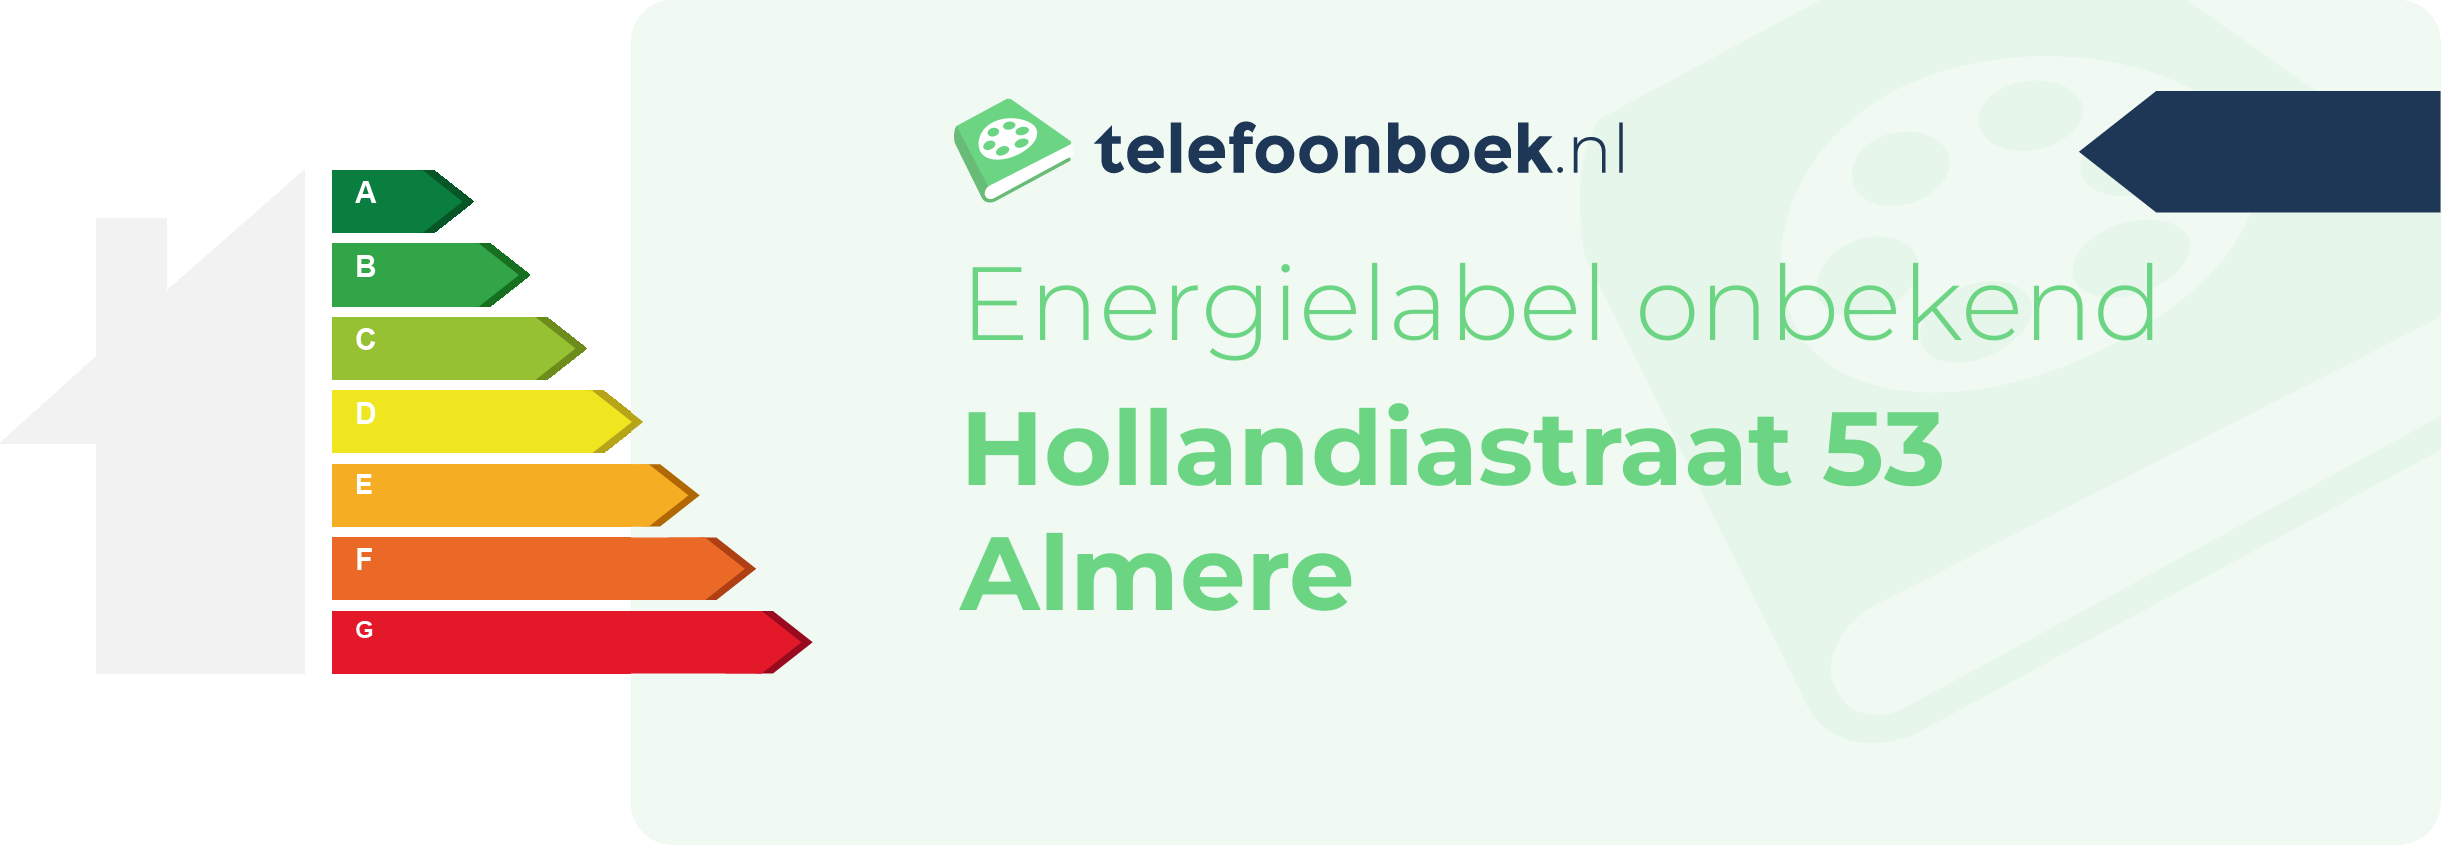 Energielabel Hollandiastraat 53 Almere